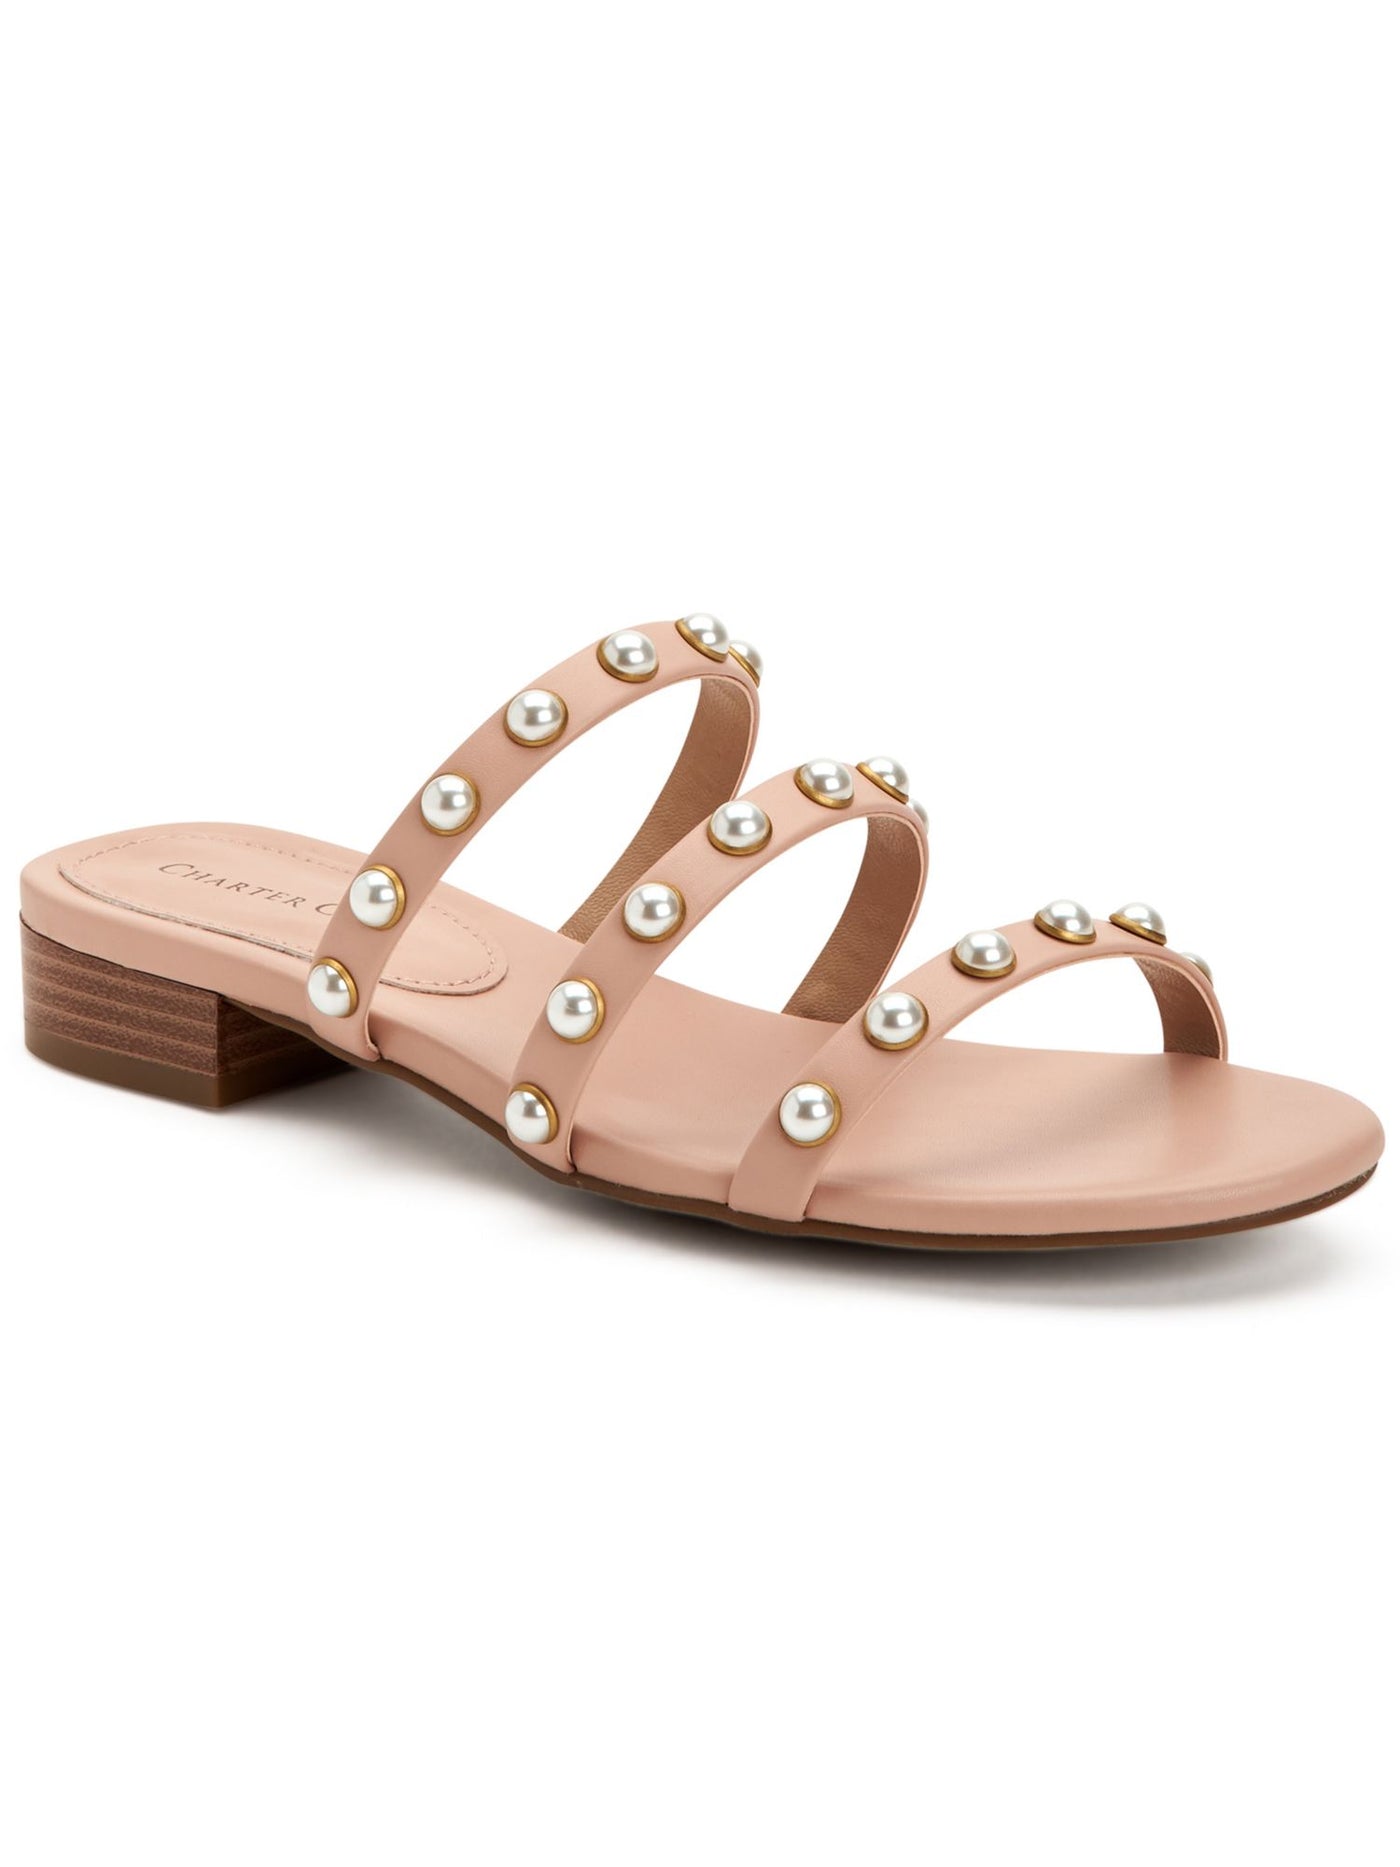 CHARTER CLUB Womens Pink Imitation Pearls Soraya Almond Toe Block Heel Slip On Sandals Shoes 10 M